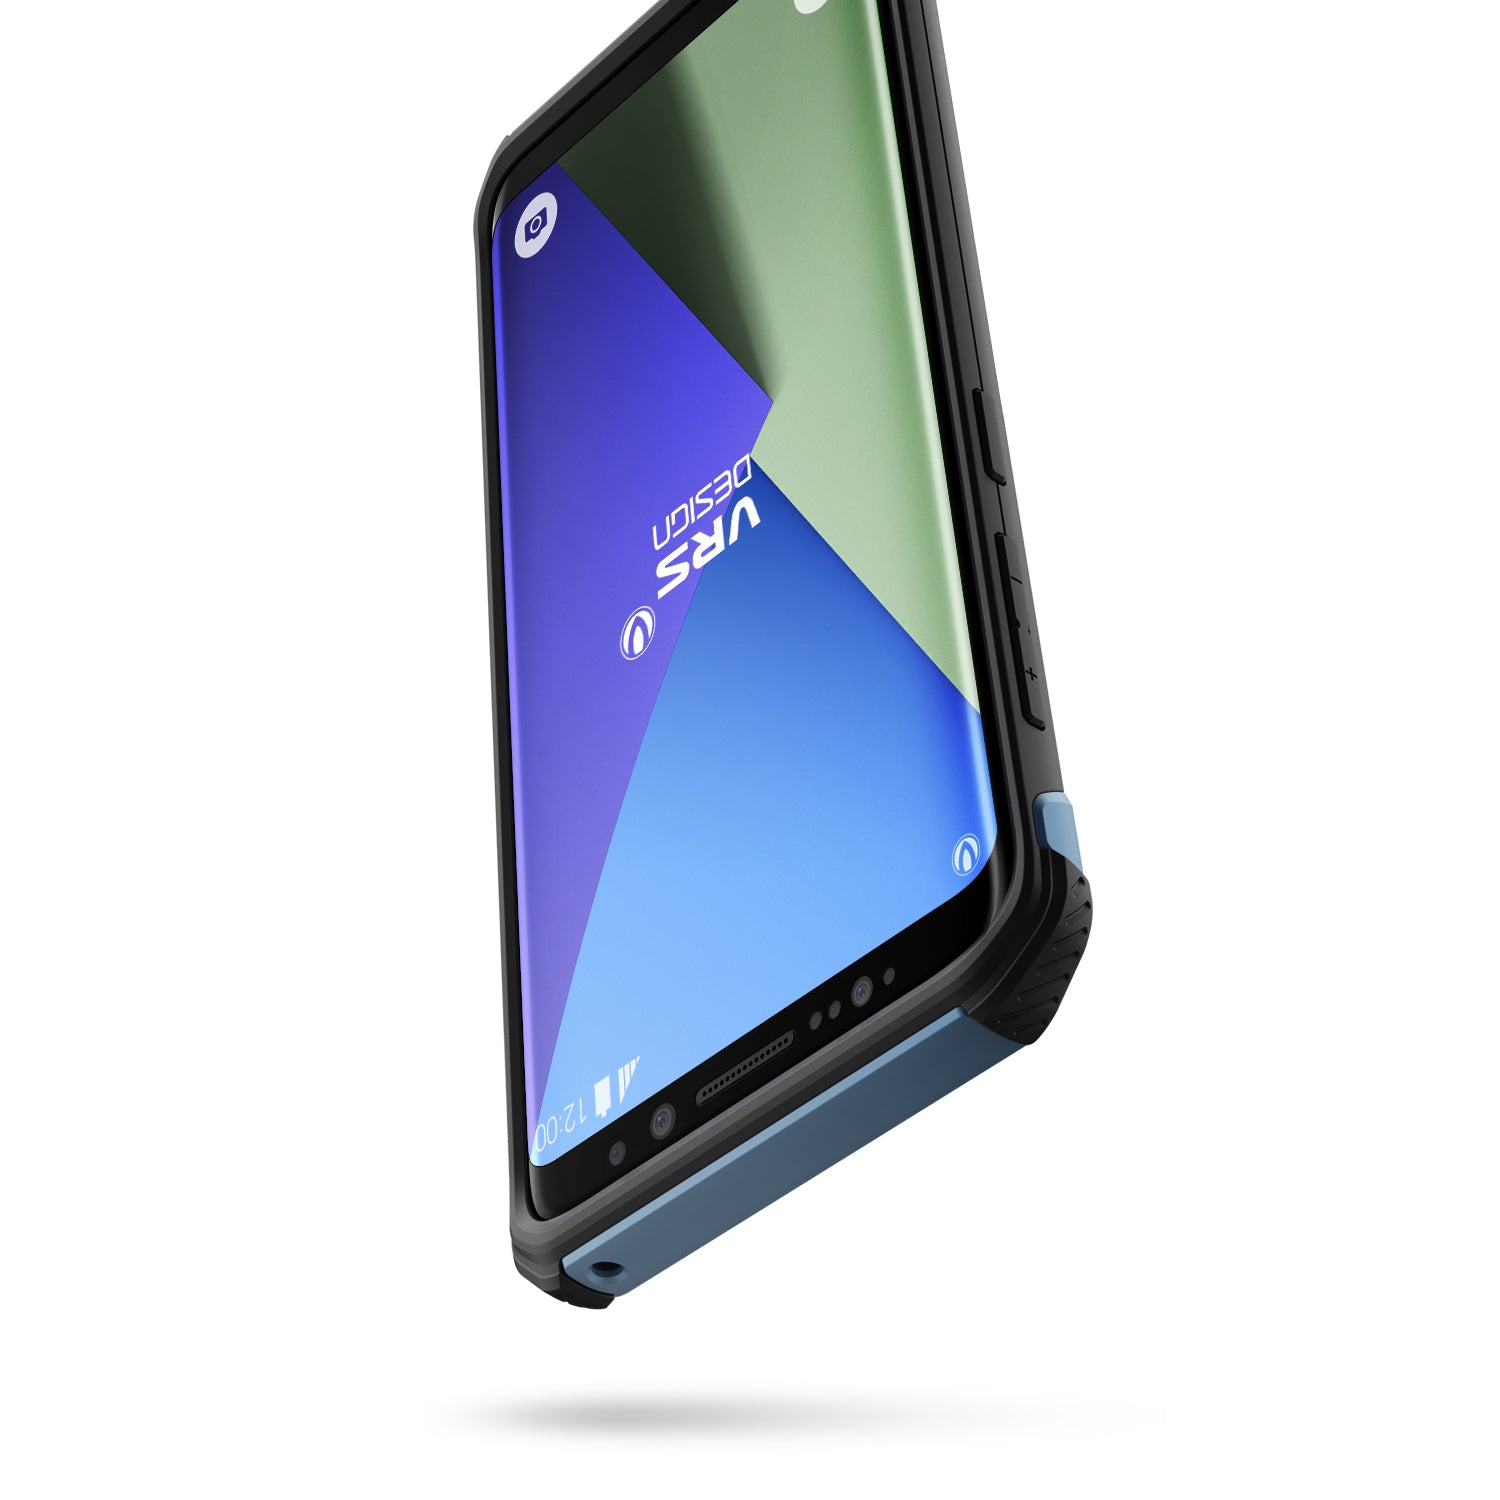 Terra Guard Series For Galaxy S8 Plus Anti Shocks Tough Rugged Case Original From VRS Blue